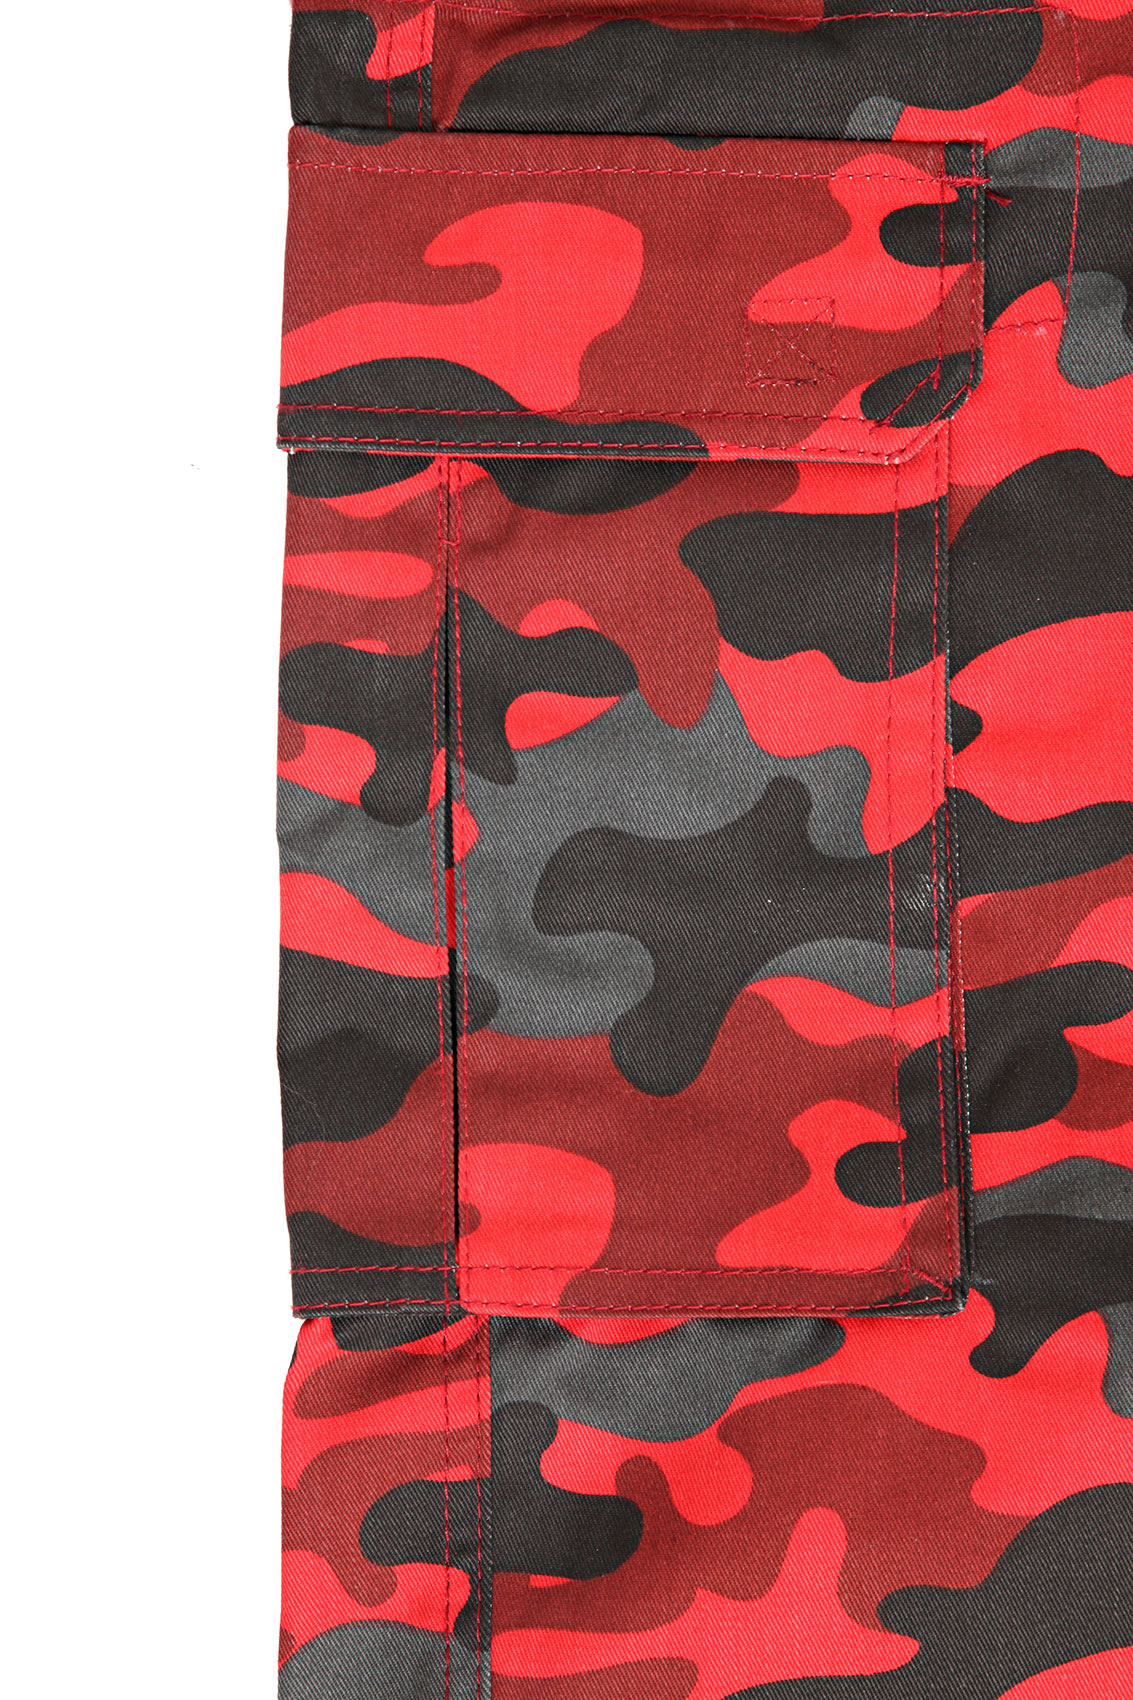 NOIZ Red & Black Camo Print Cotton Cargo Shorts With Pockets Extra ...